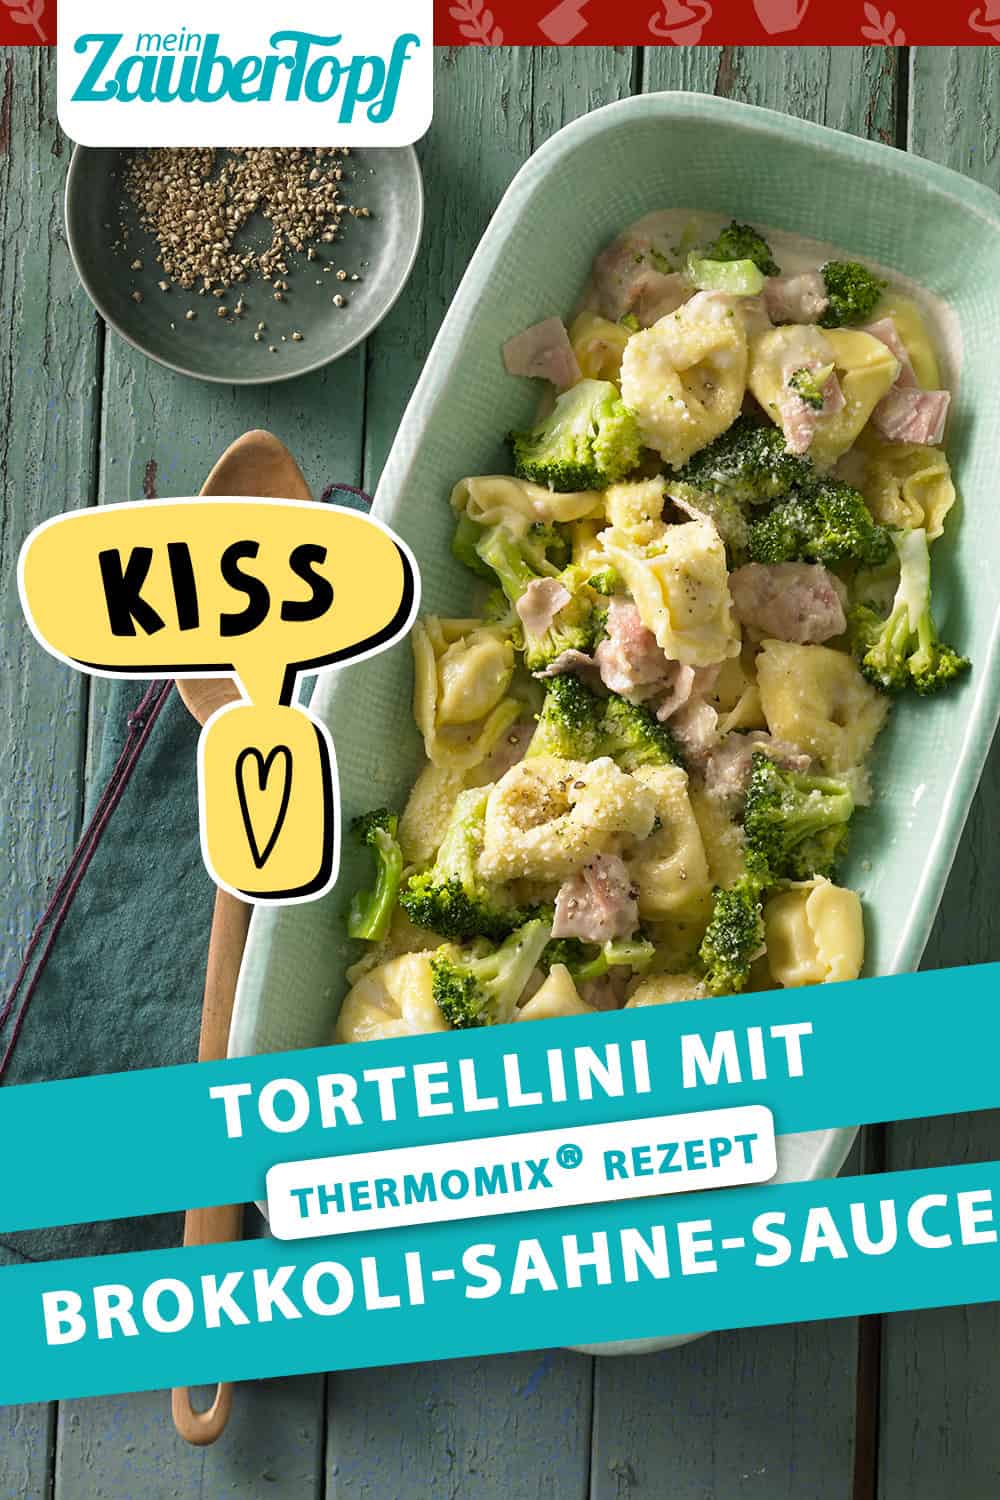 Tortellini mit Brokkoli-Sahne-Sauce aus dem Thermomix® - Foto: Thomas Neckermann